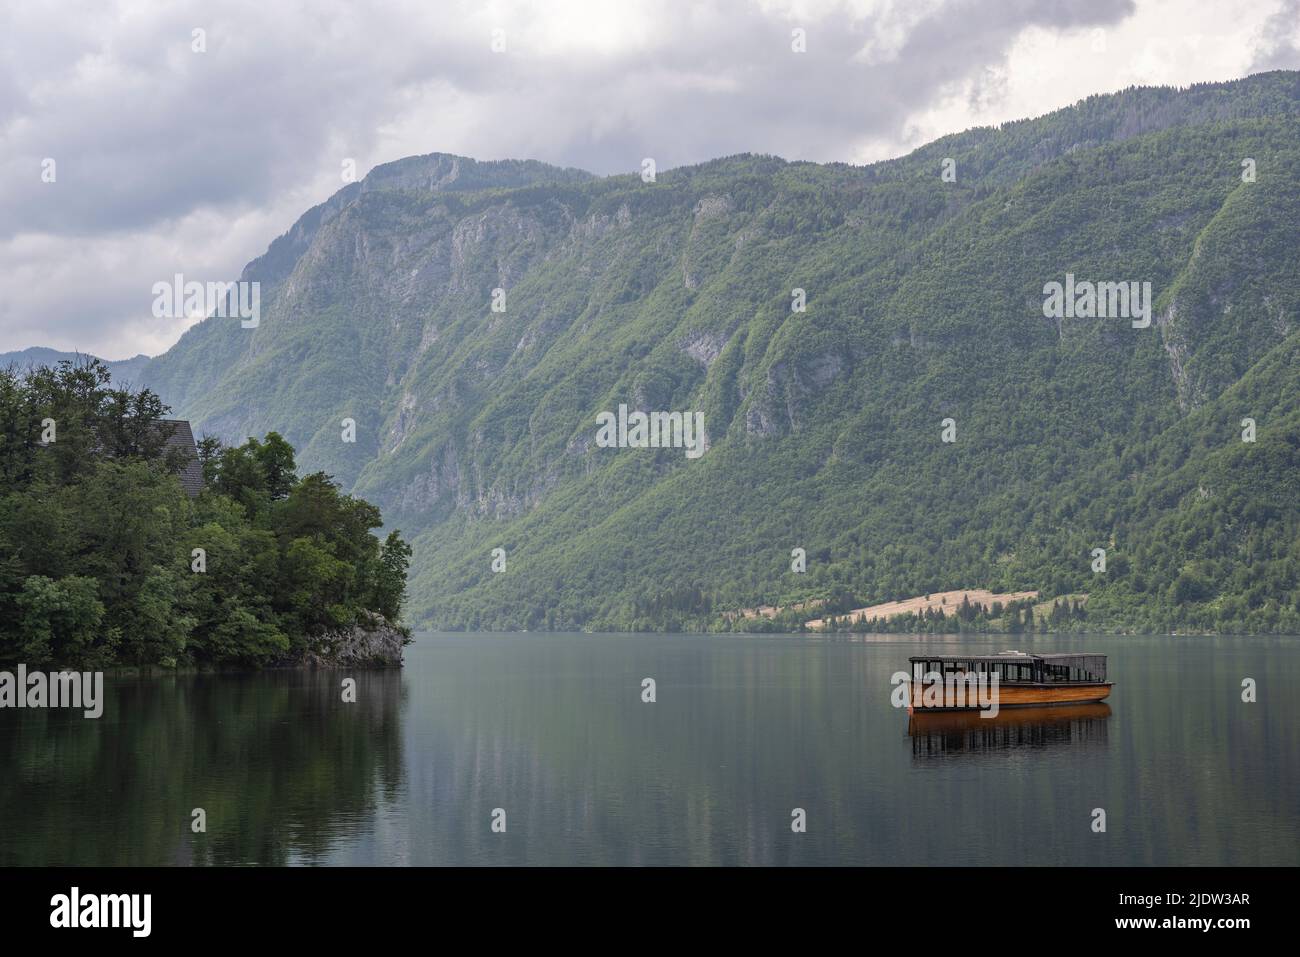 Wooden Excursion Boat Moored in Lake Bohinj, Slovenia Stock Photo